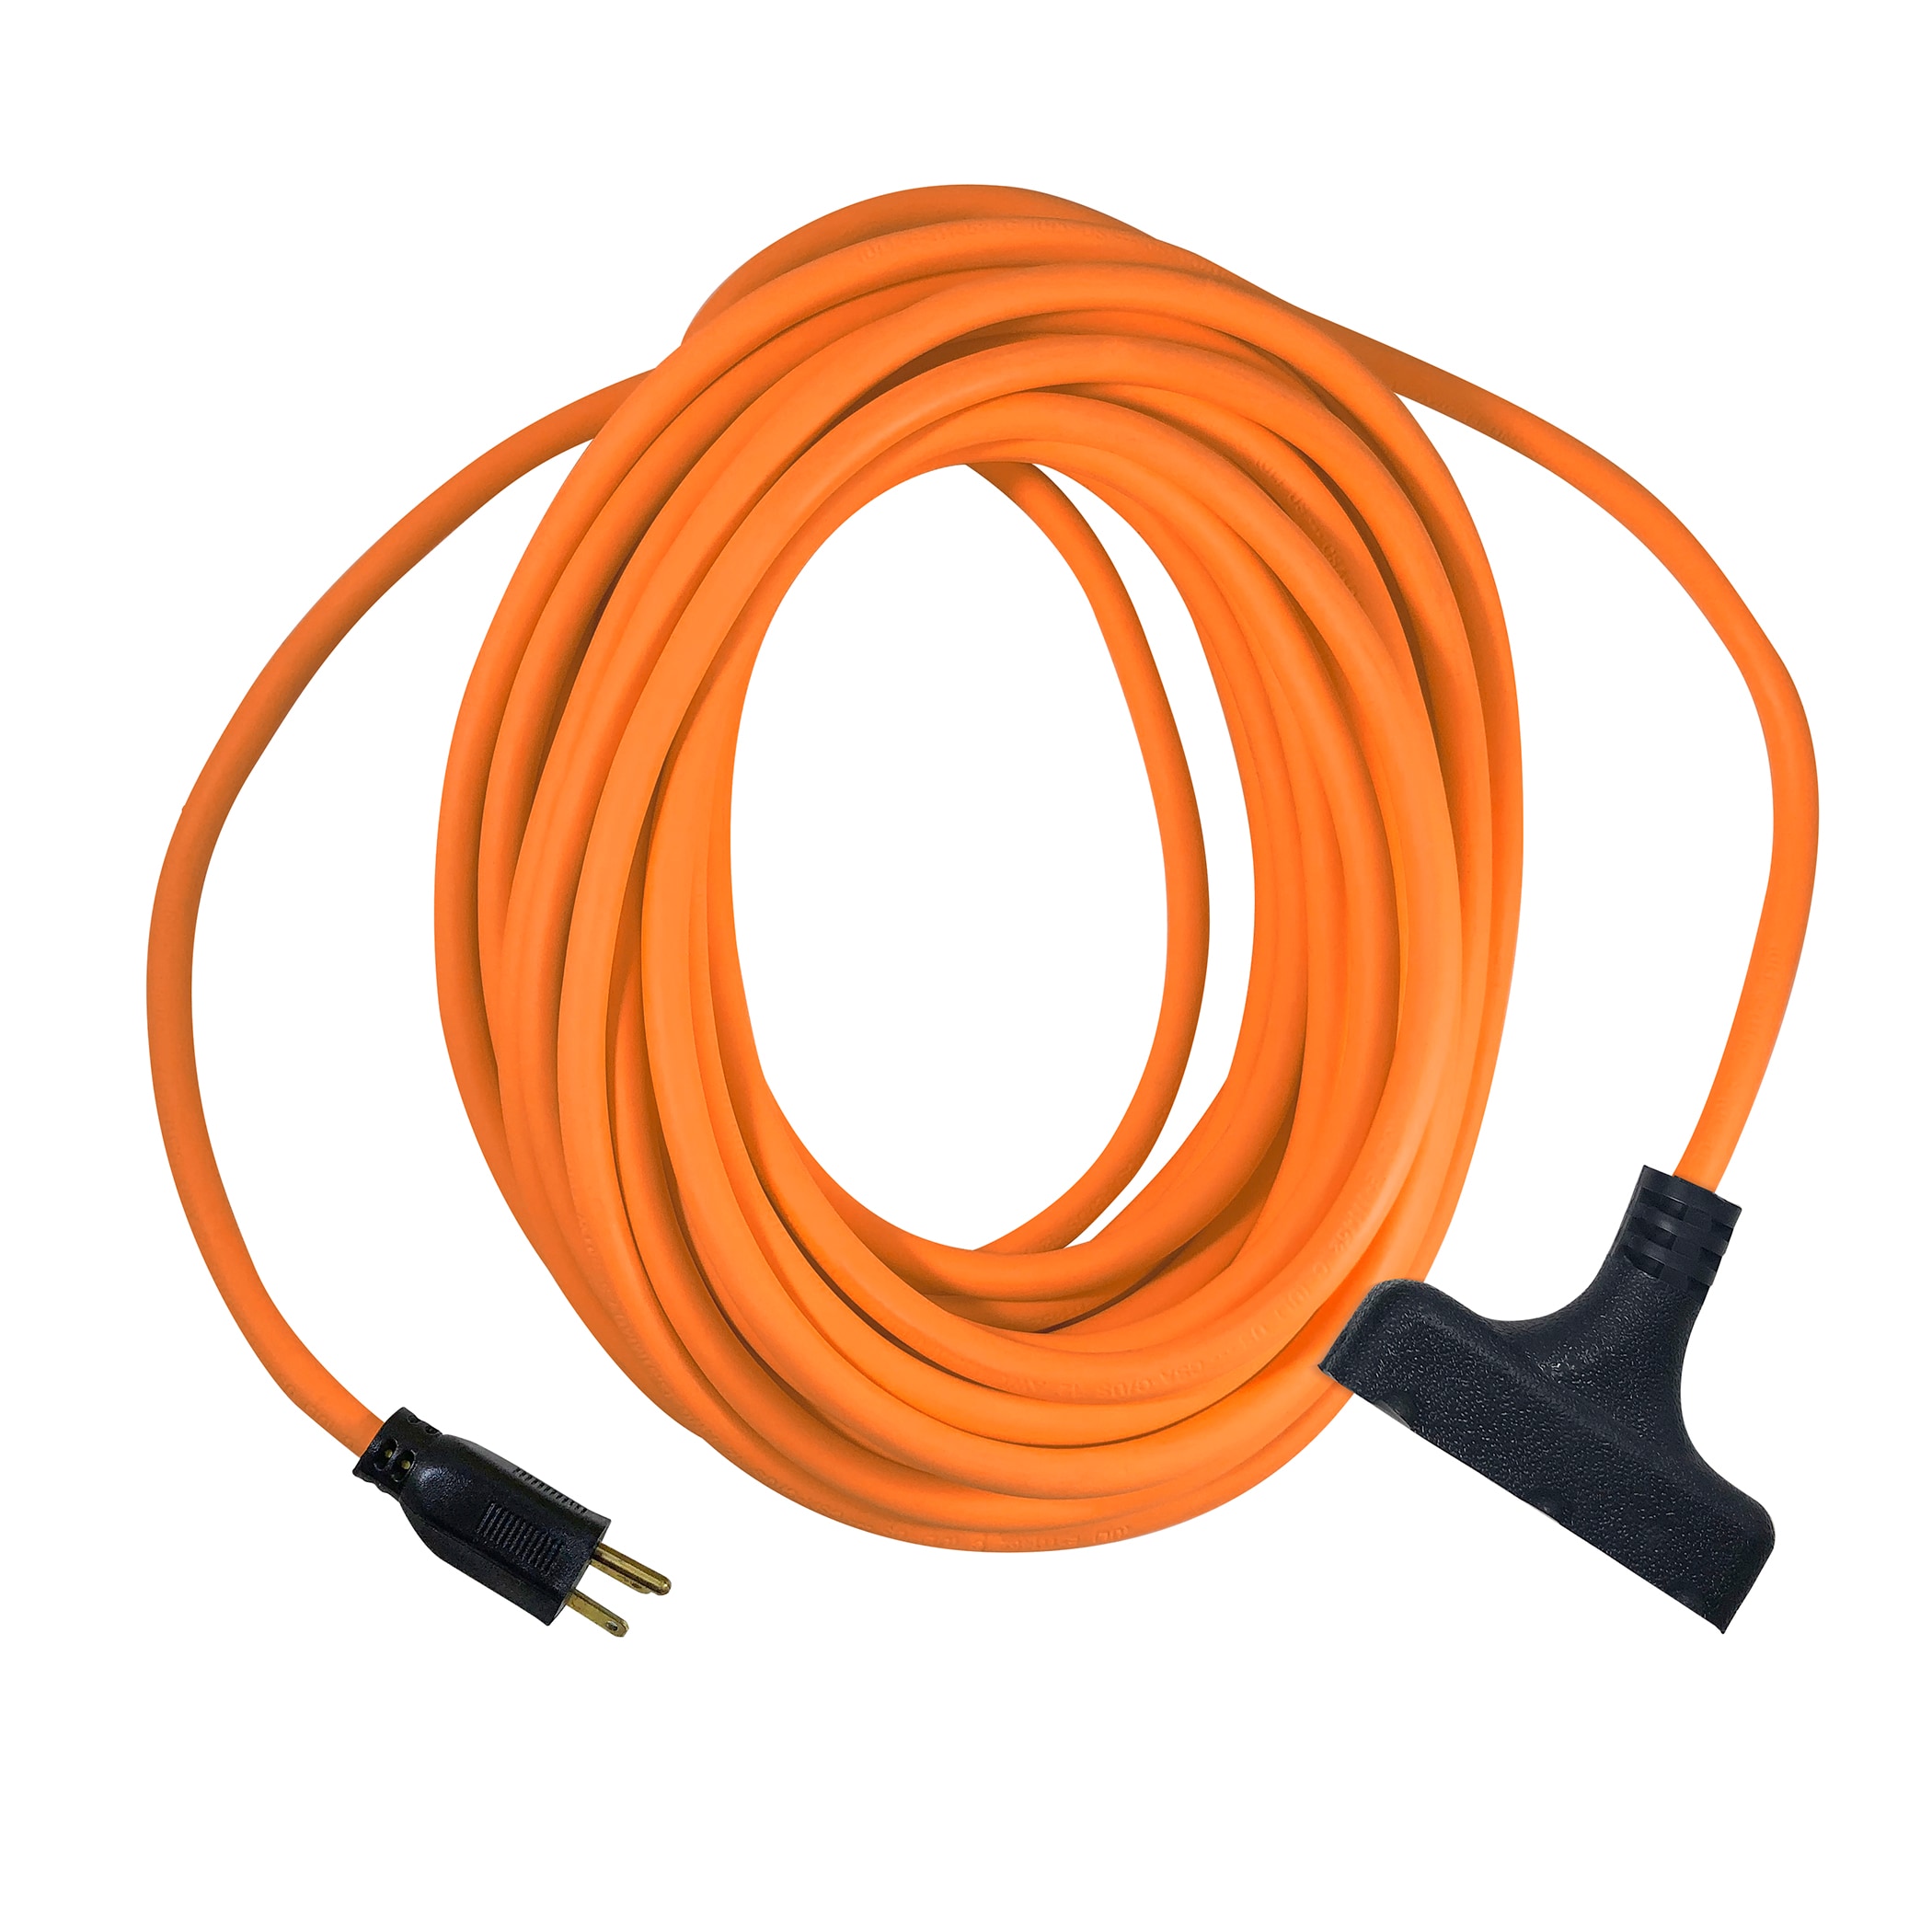 U.S. Wire 64050 50 ft. 3-Conductor Orange Powe-R-Block Cord, 12/3